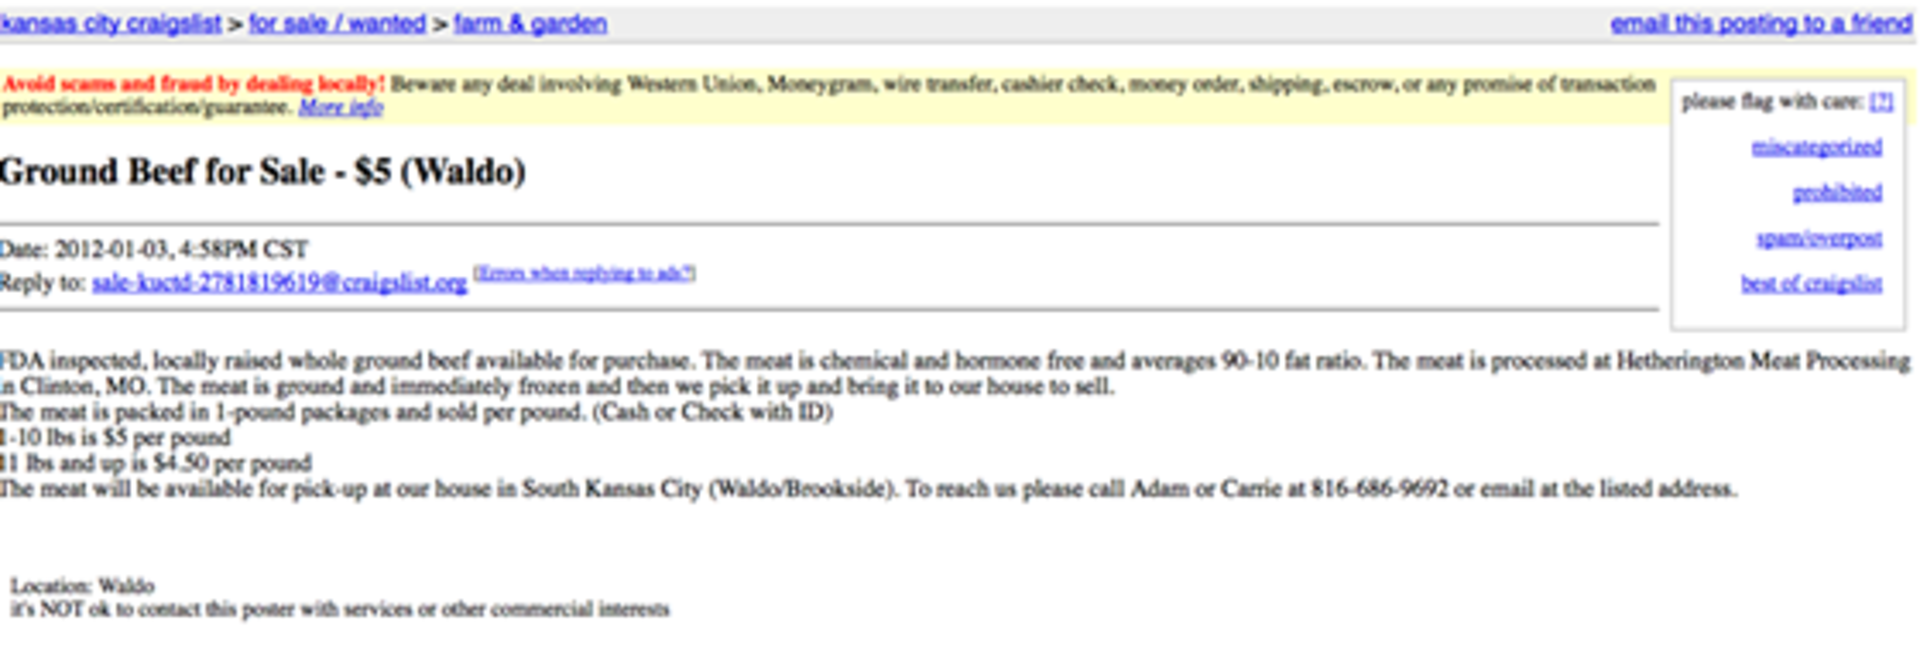 bhe bautista recommends Can City Missouri Craigslist